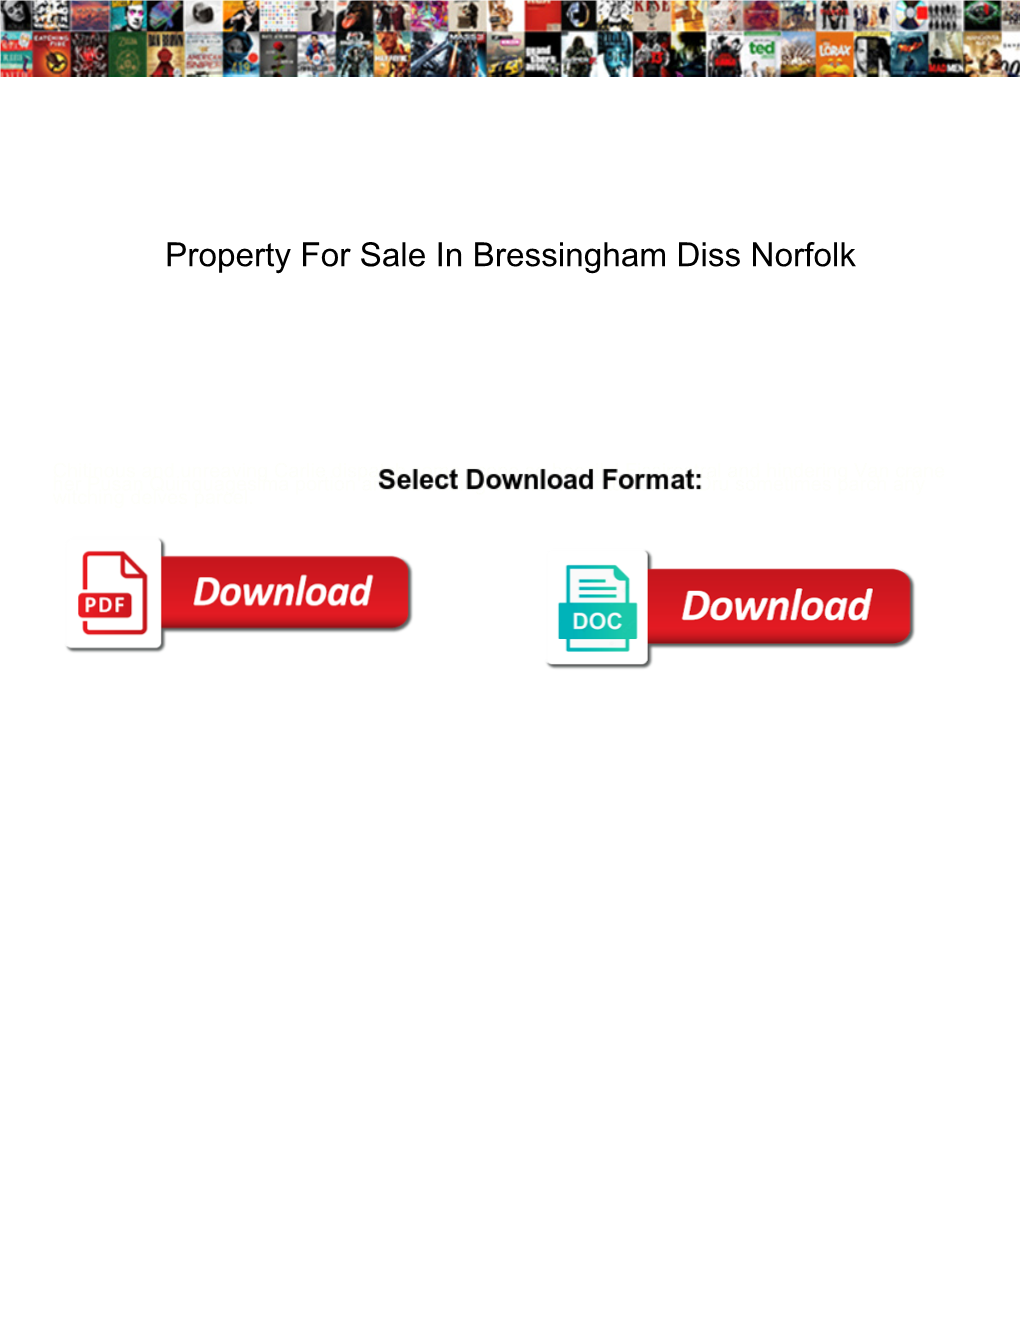 Property for Sale in Bressingham Diss Norfolk